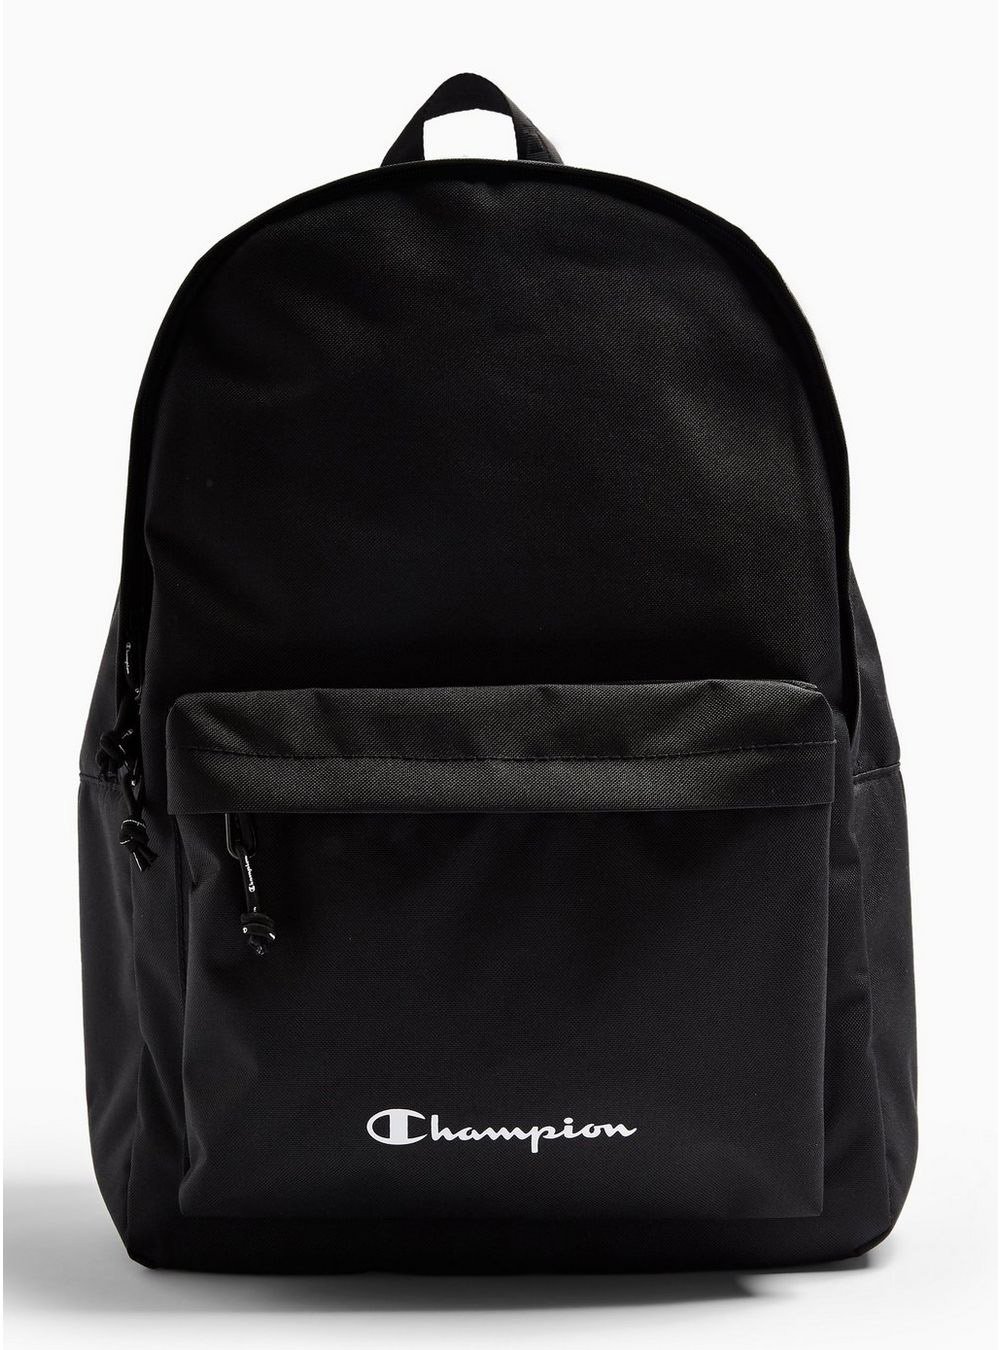 champion backpack black